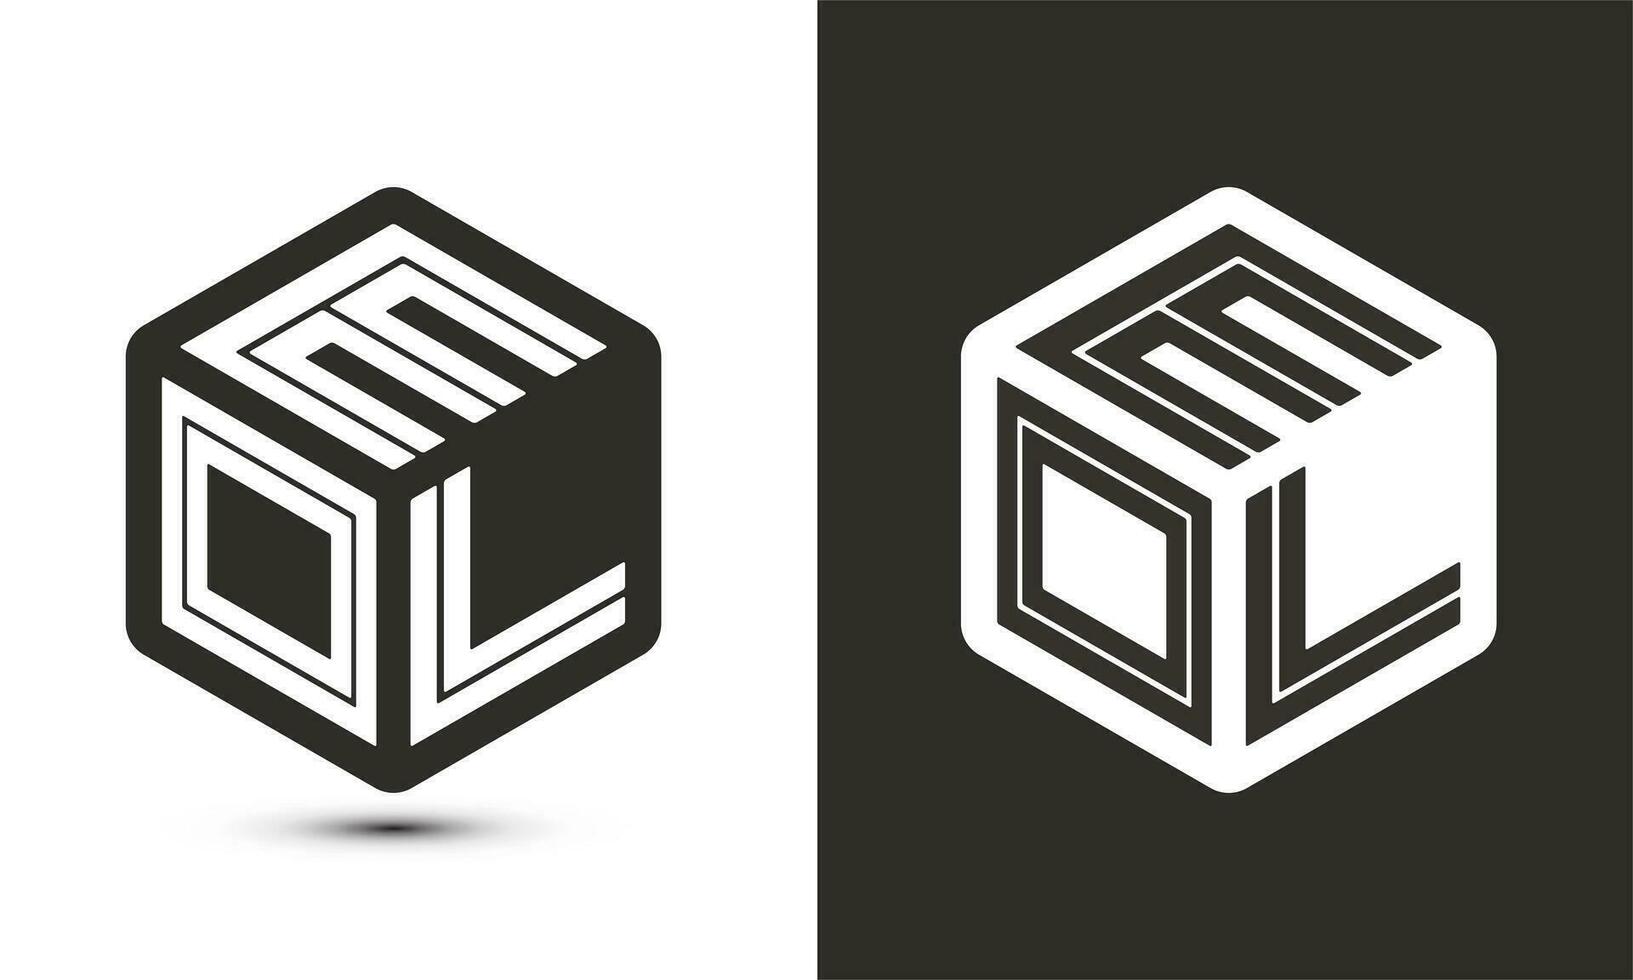 eol letra logo diseño con ilustrador cubo logo, vector logo moderno alfabeto fuente superposición estilo.